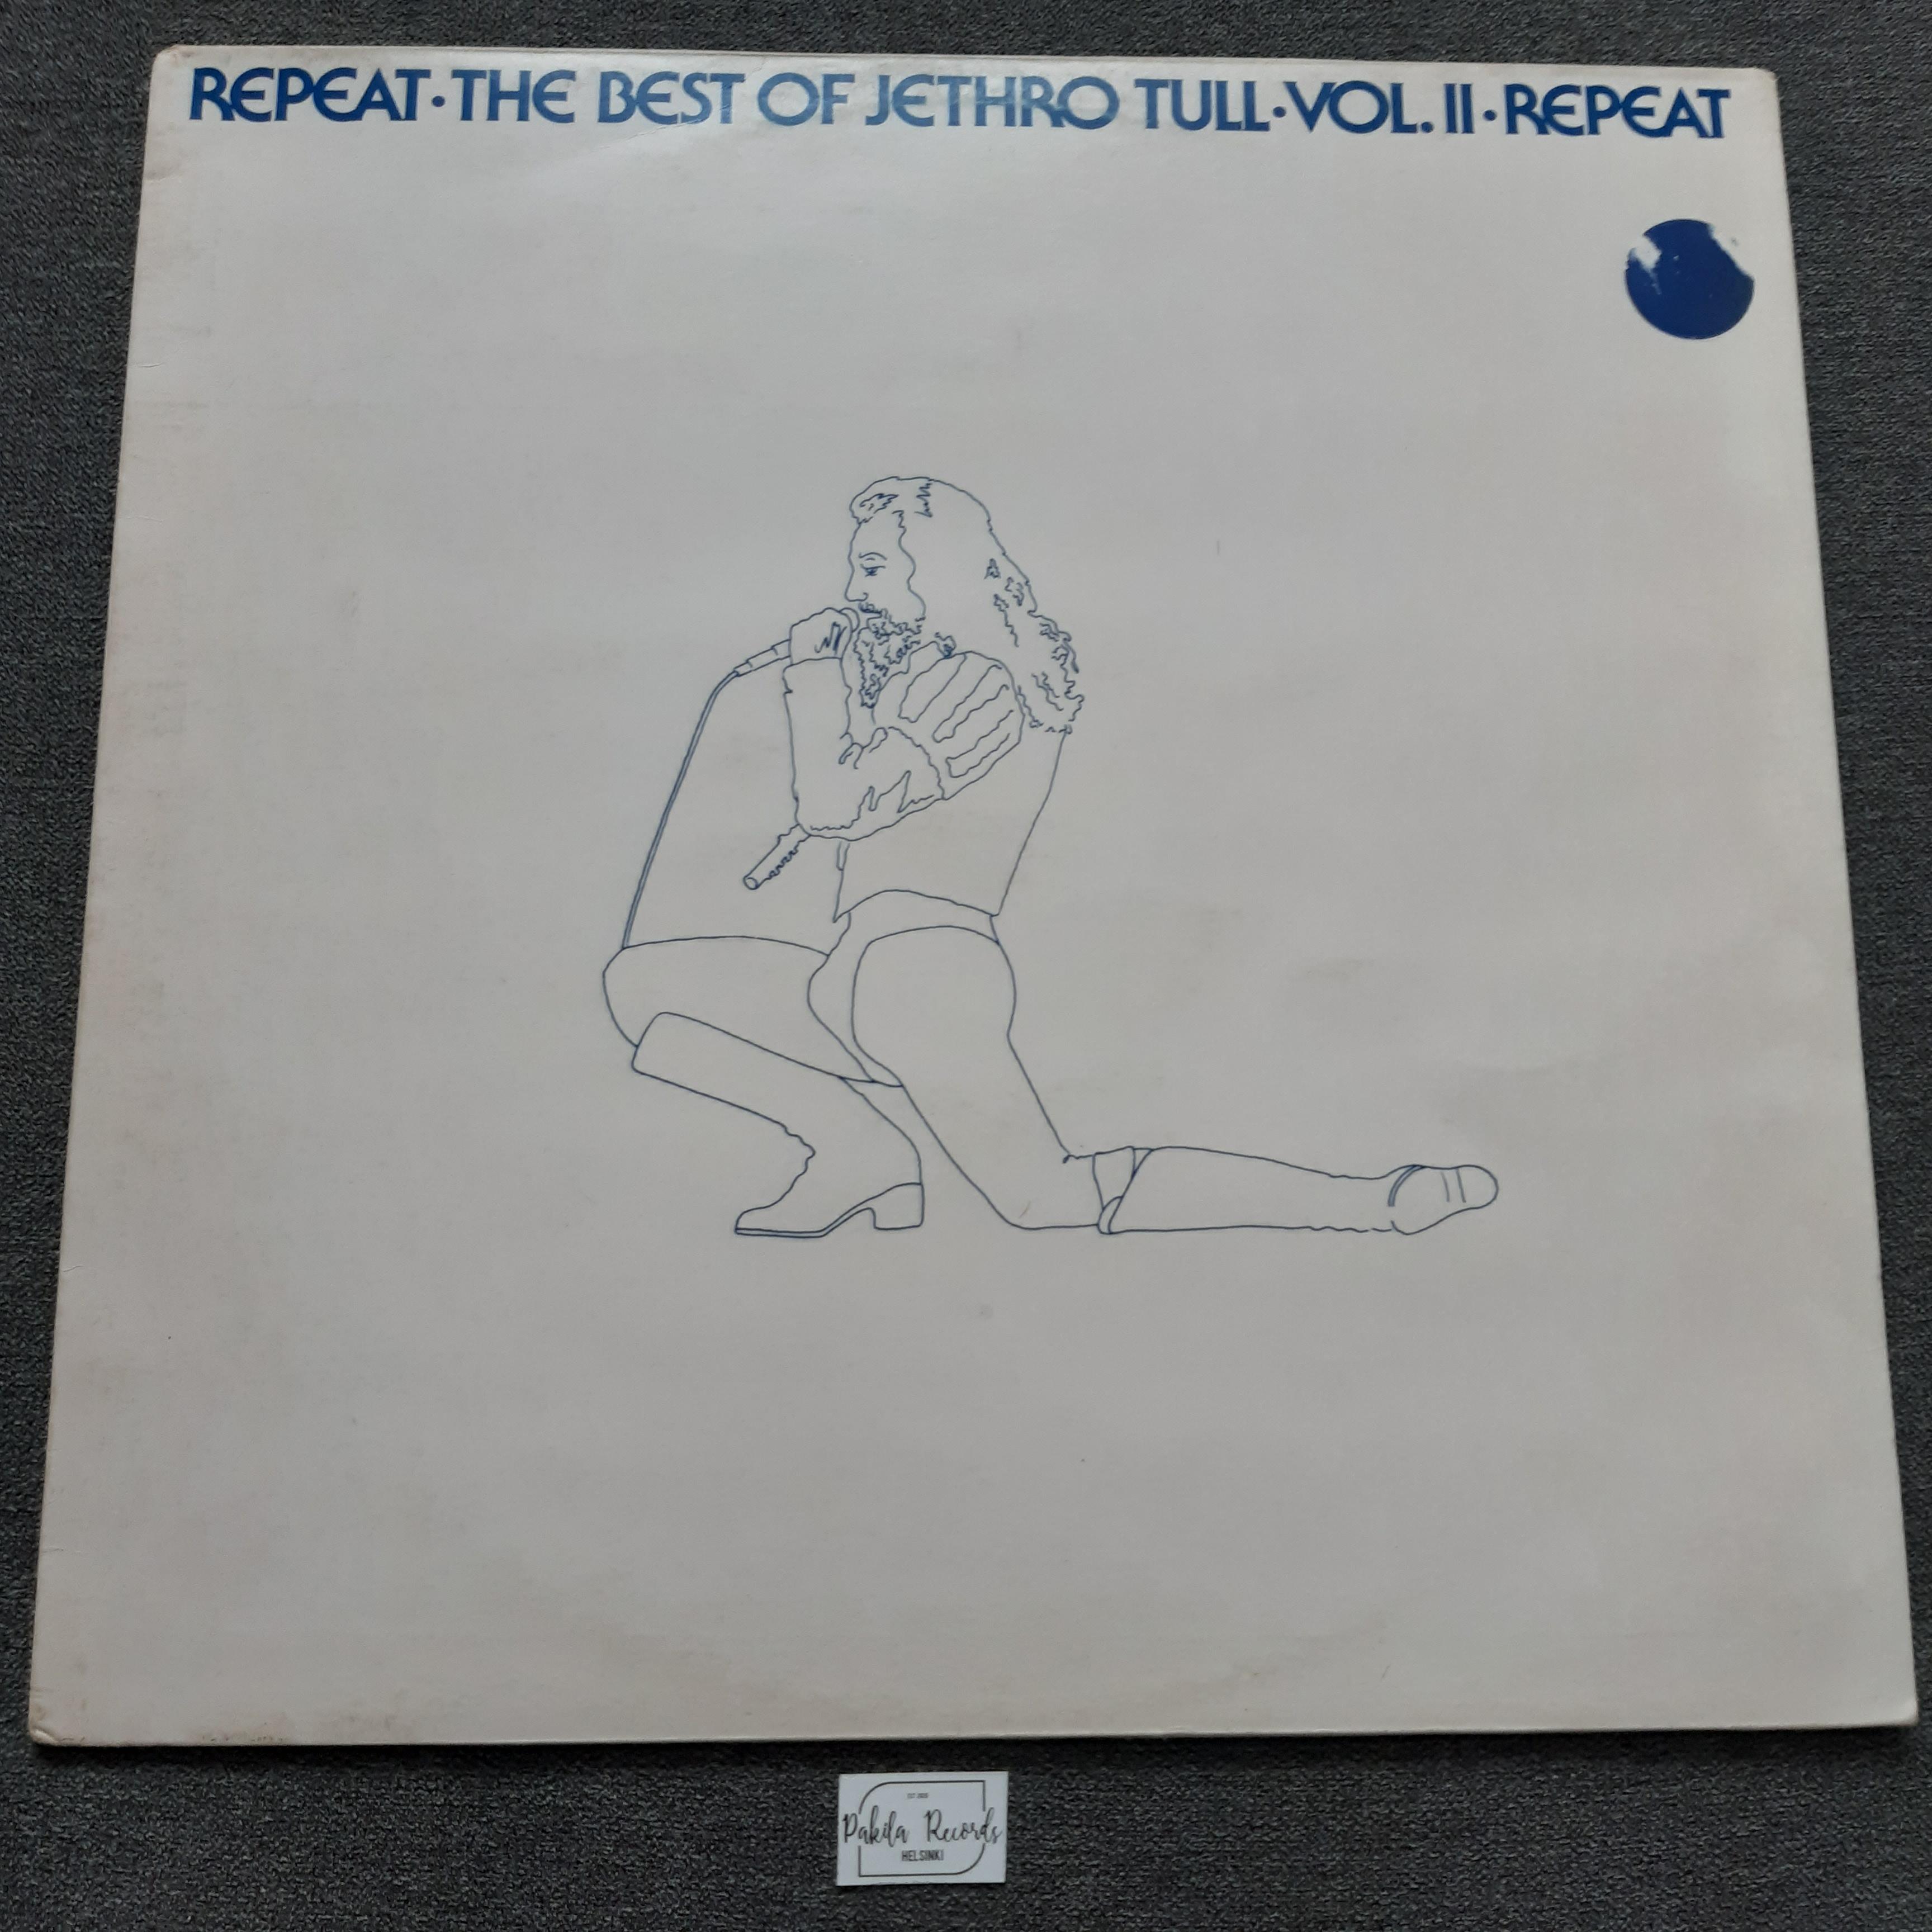 Jethro Tull - Repeat, The Best Of Jethro Tull, Vol. II - LP (käytetty)